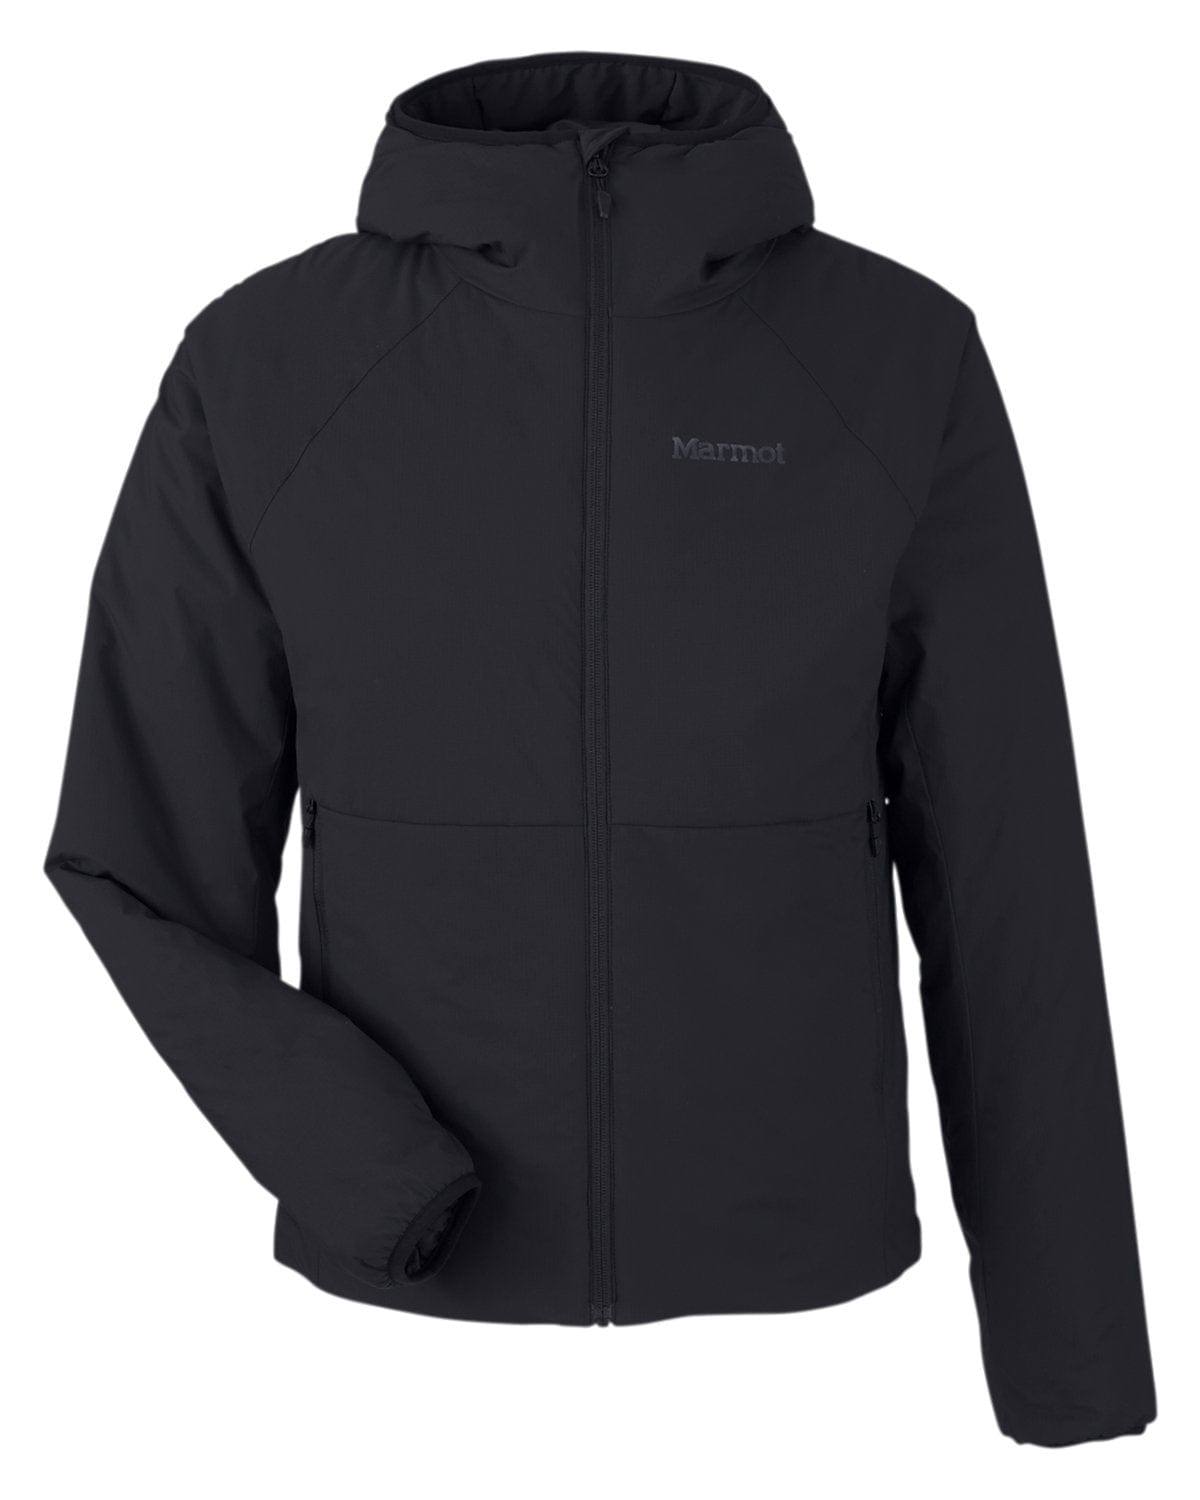 Marmot Outerwear S / Black Marmot - Men's Novus Jacket